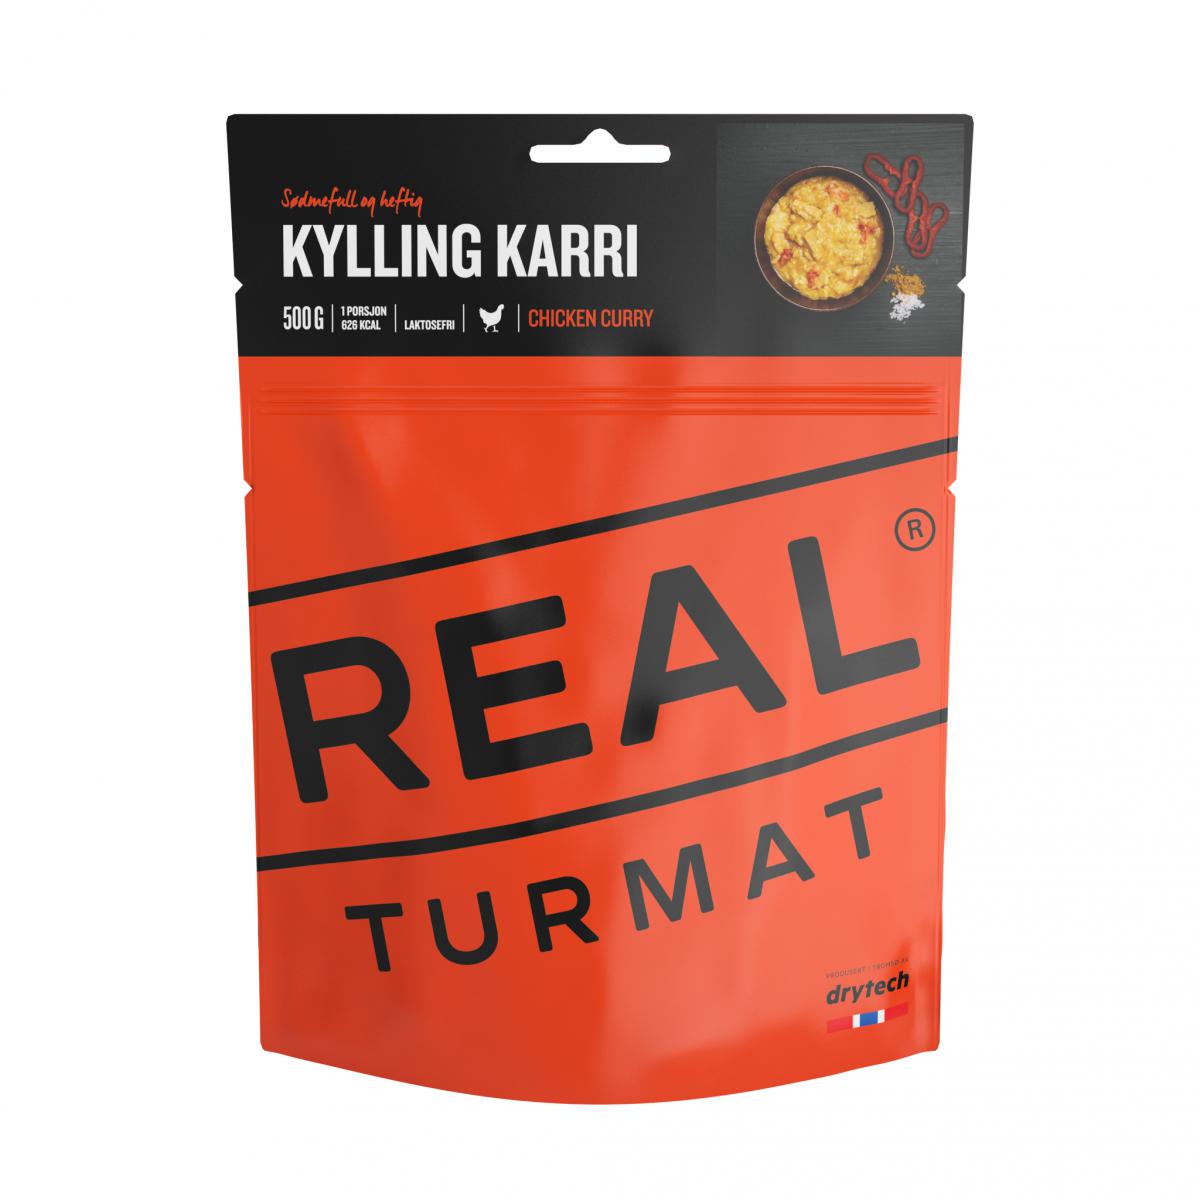 Real Turmat, Kylling Karri 500g, Turmat